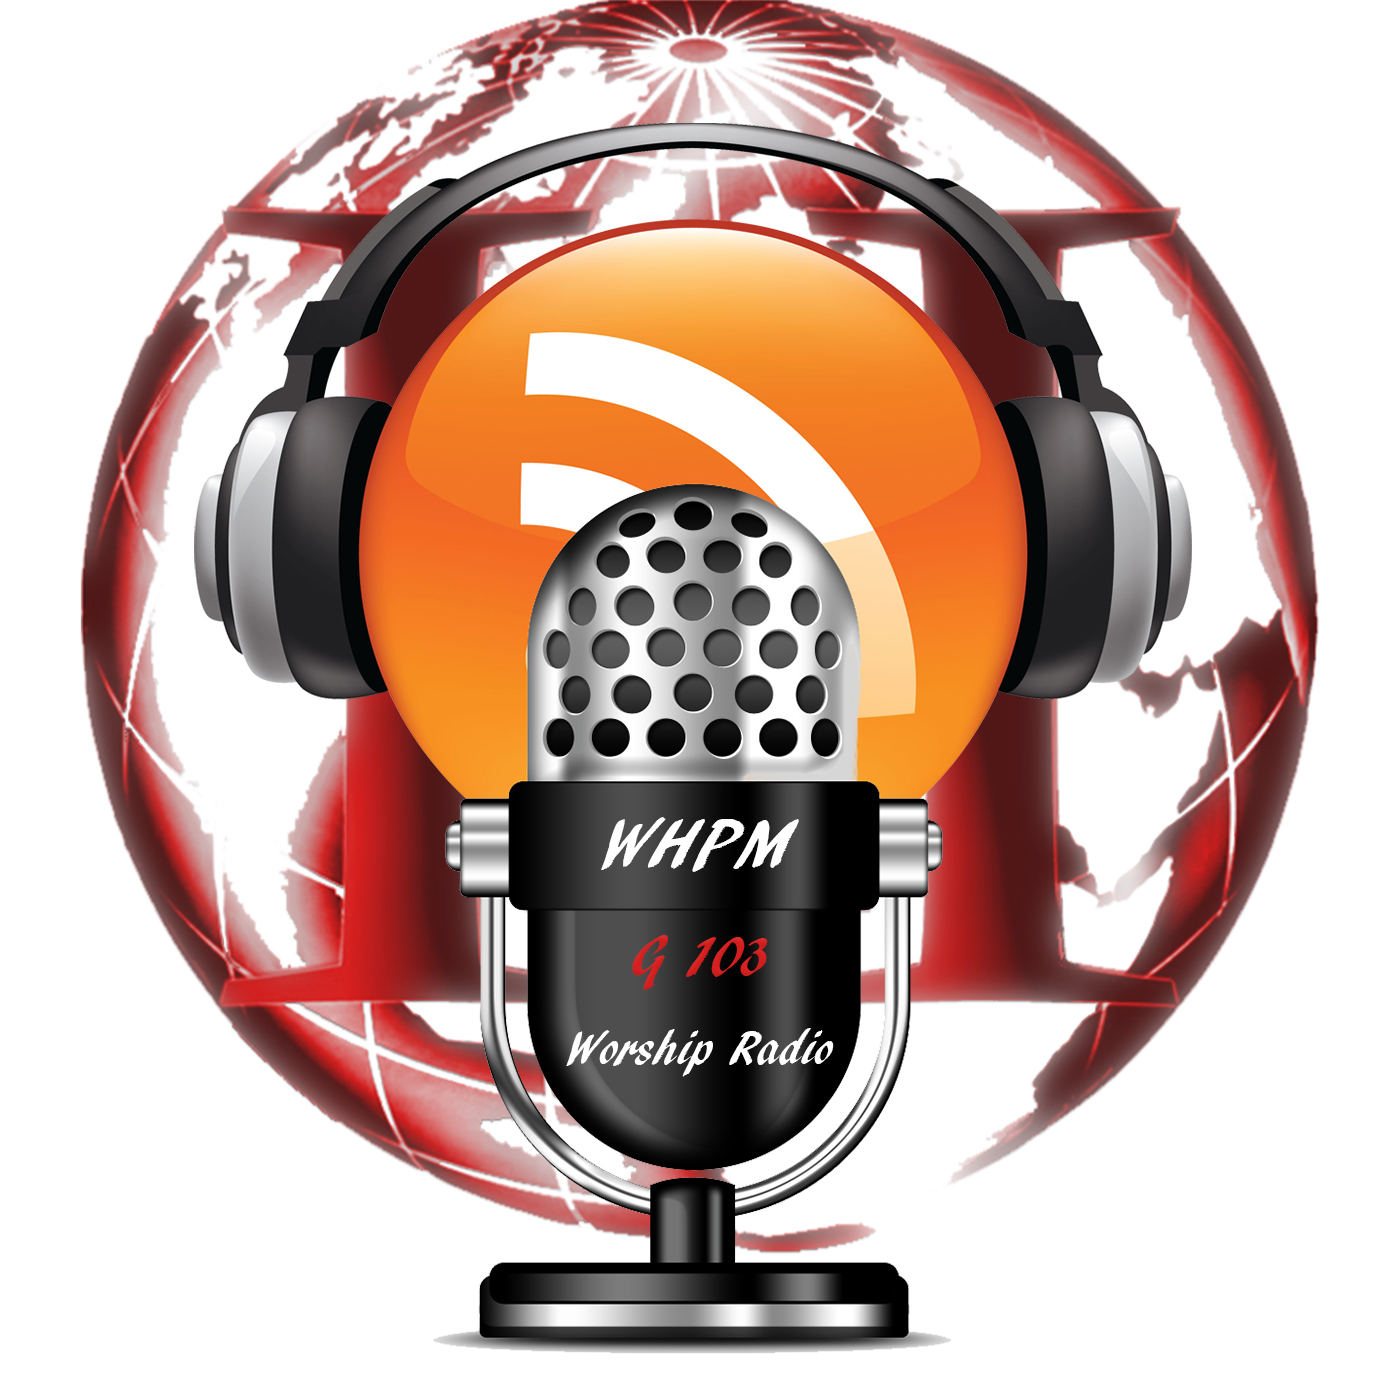 HPM Worship Radio - WHPM G103: Marvin Sapp 